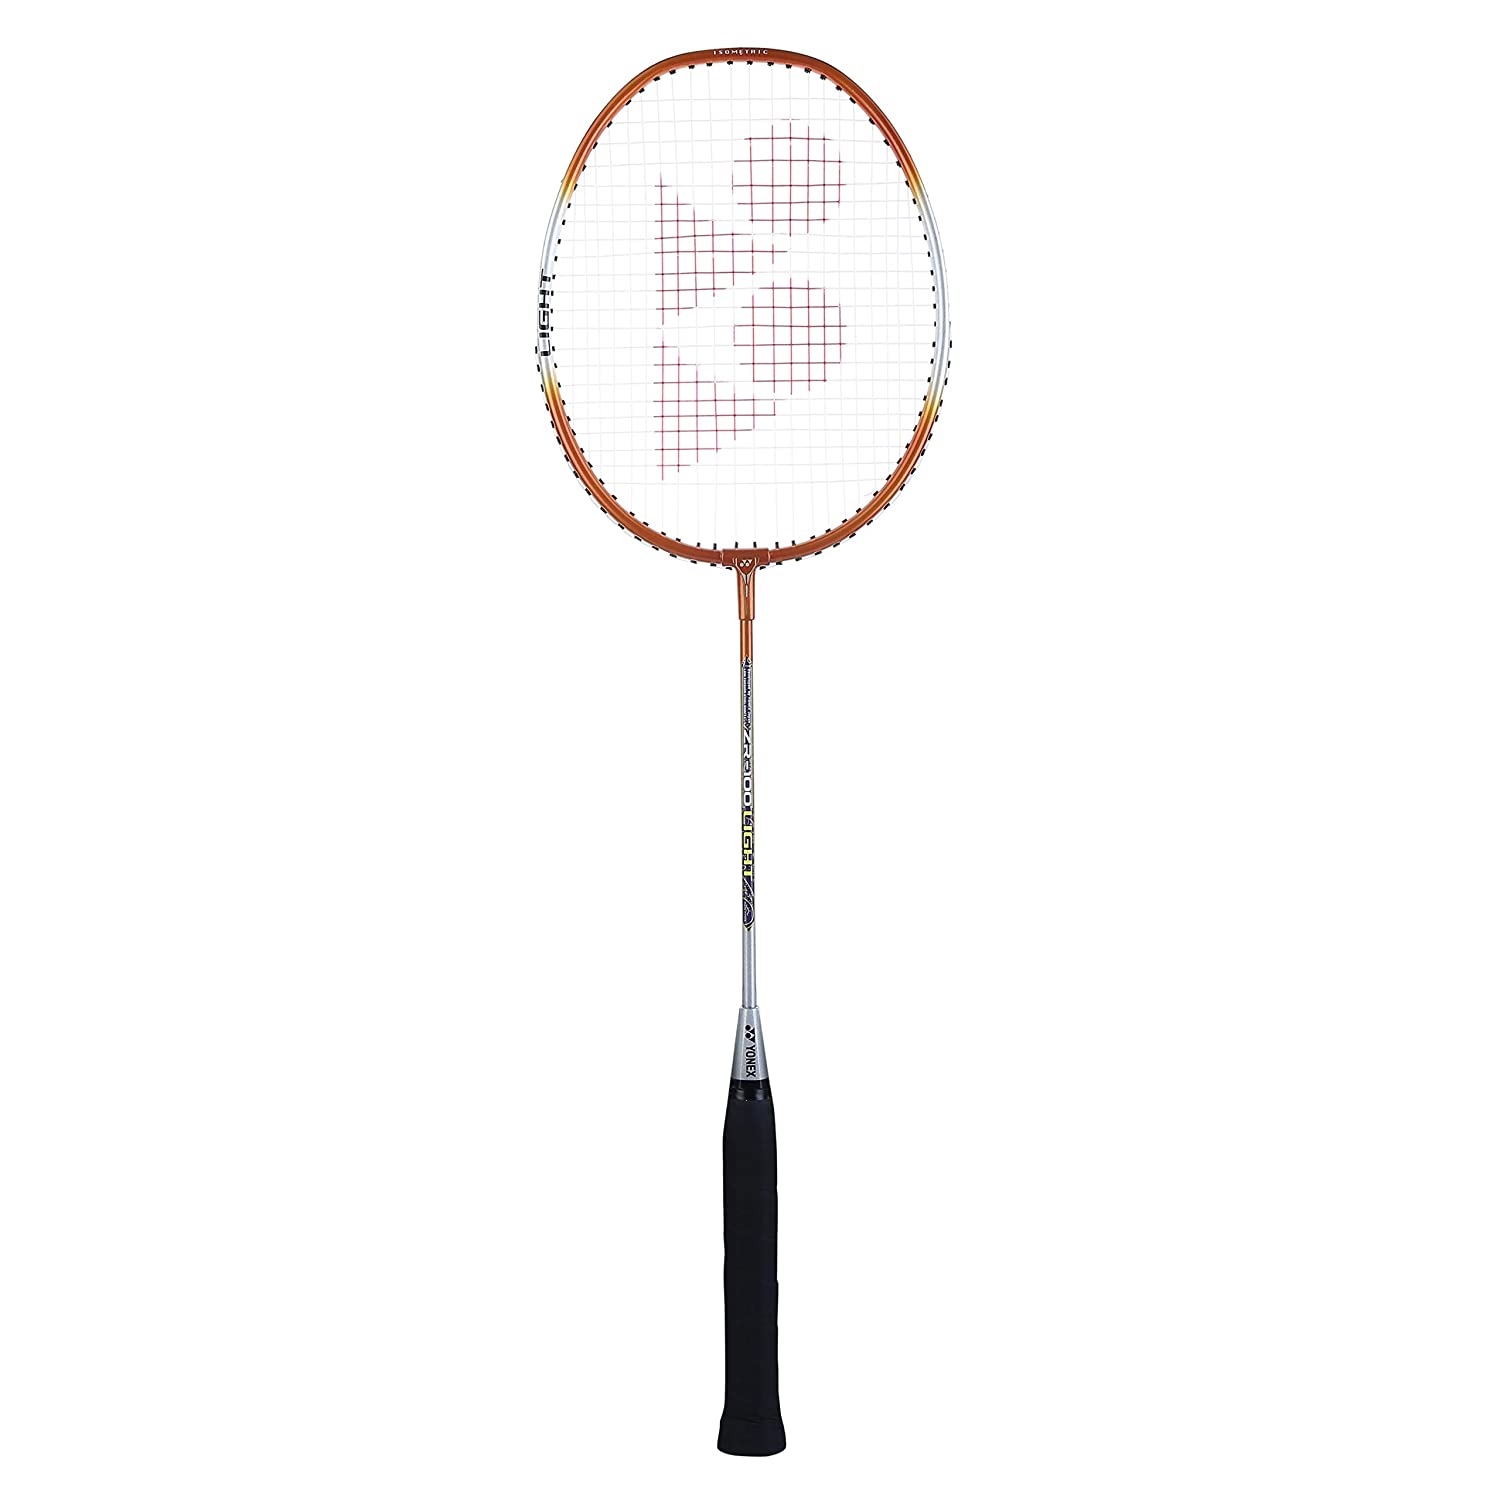 Yonex ZR 100 Light Orange Color Aluminium Badminton Racket with Full Cover Made in India sppartos